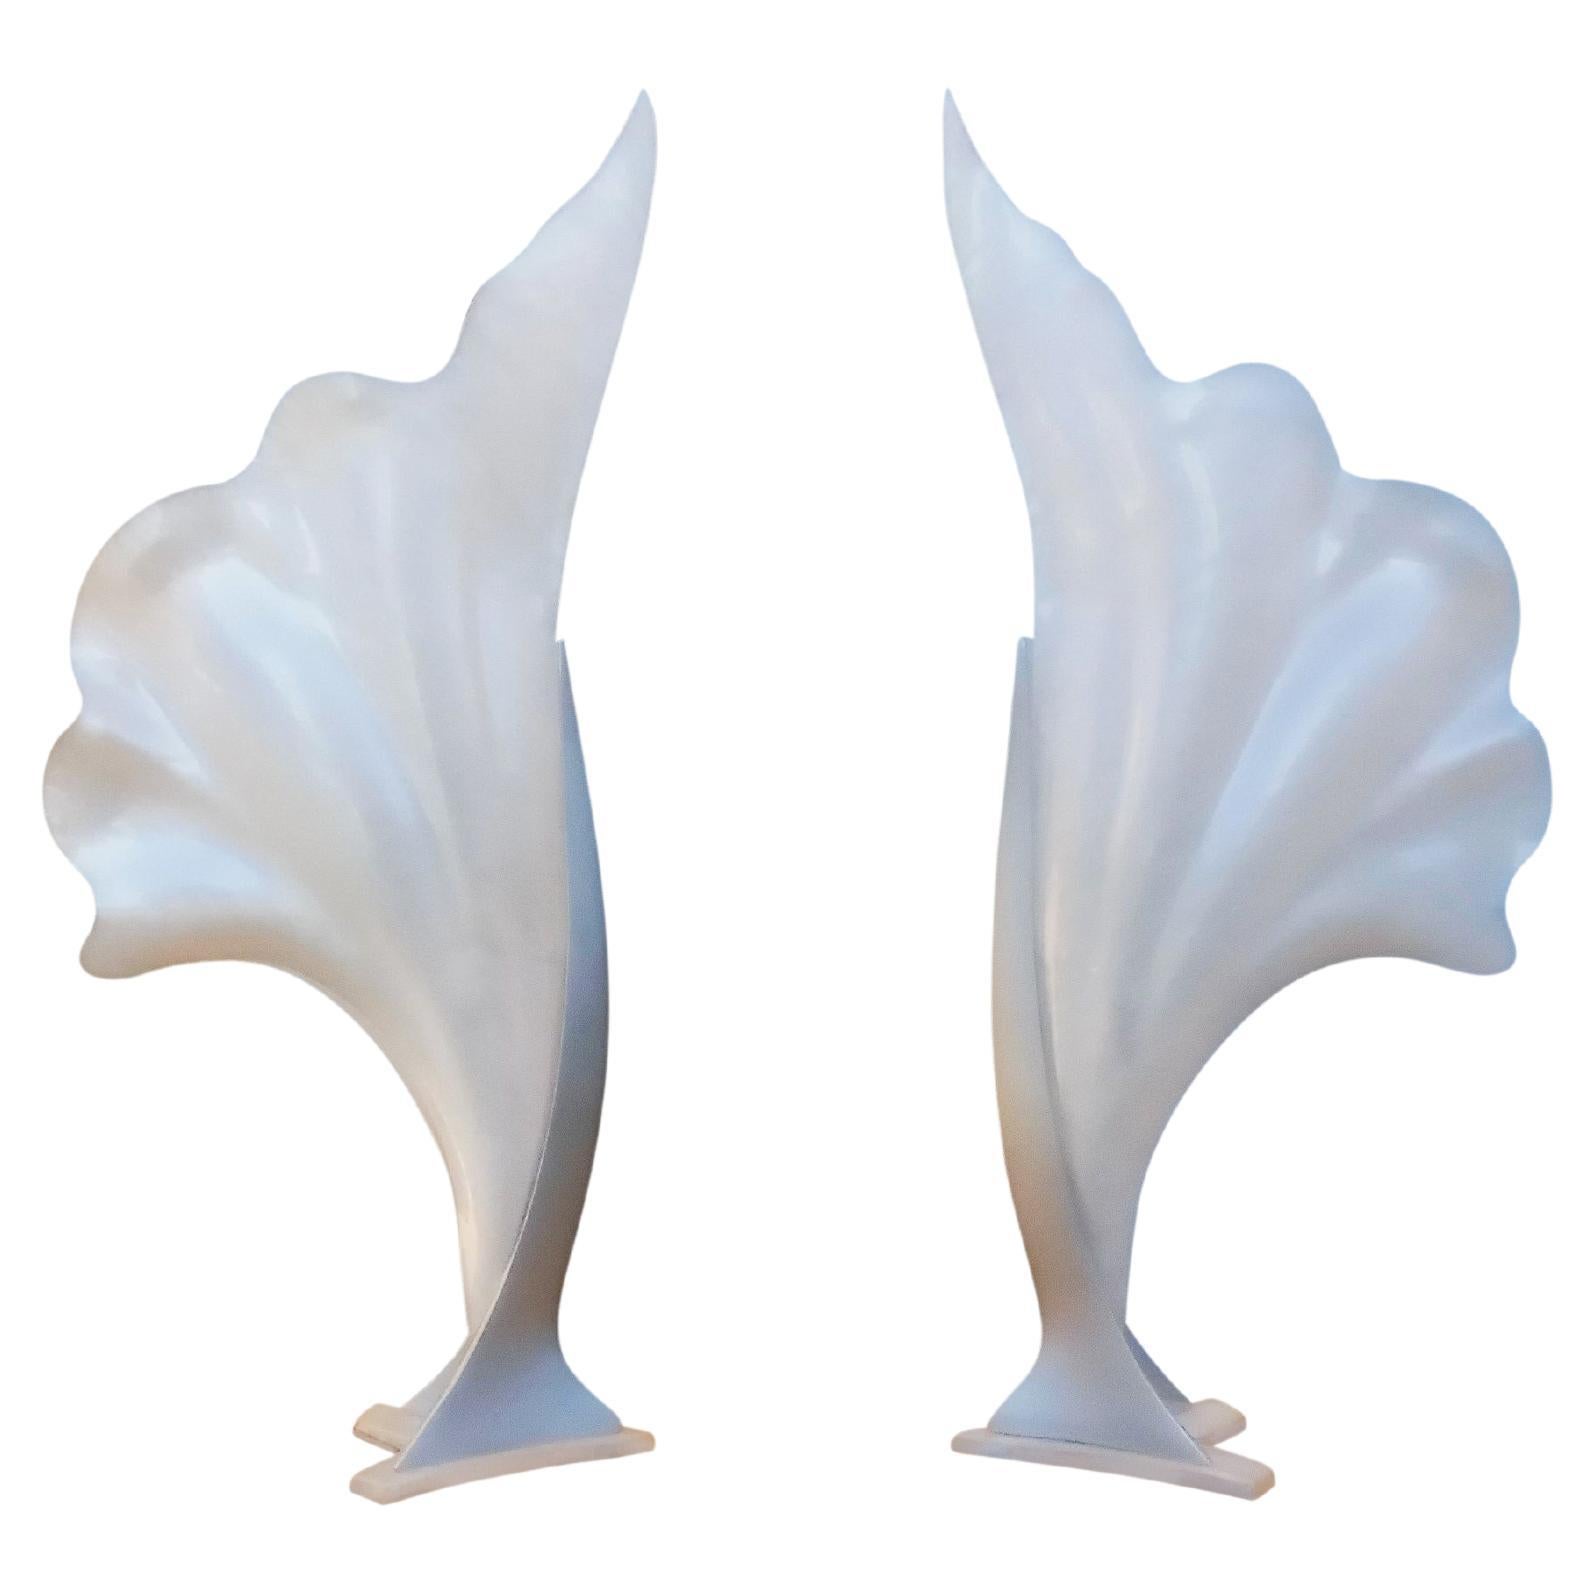 Postmodernes Paar großer, perlenförmiger Lampen aus Acryl in Muschelform, Rougier zugeschrieben